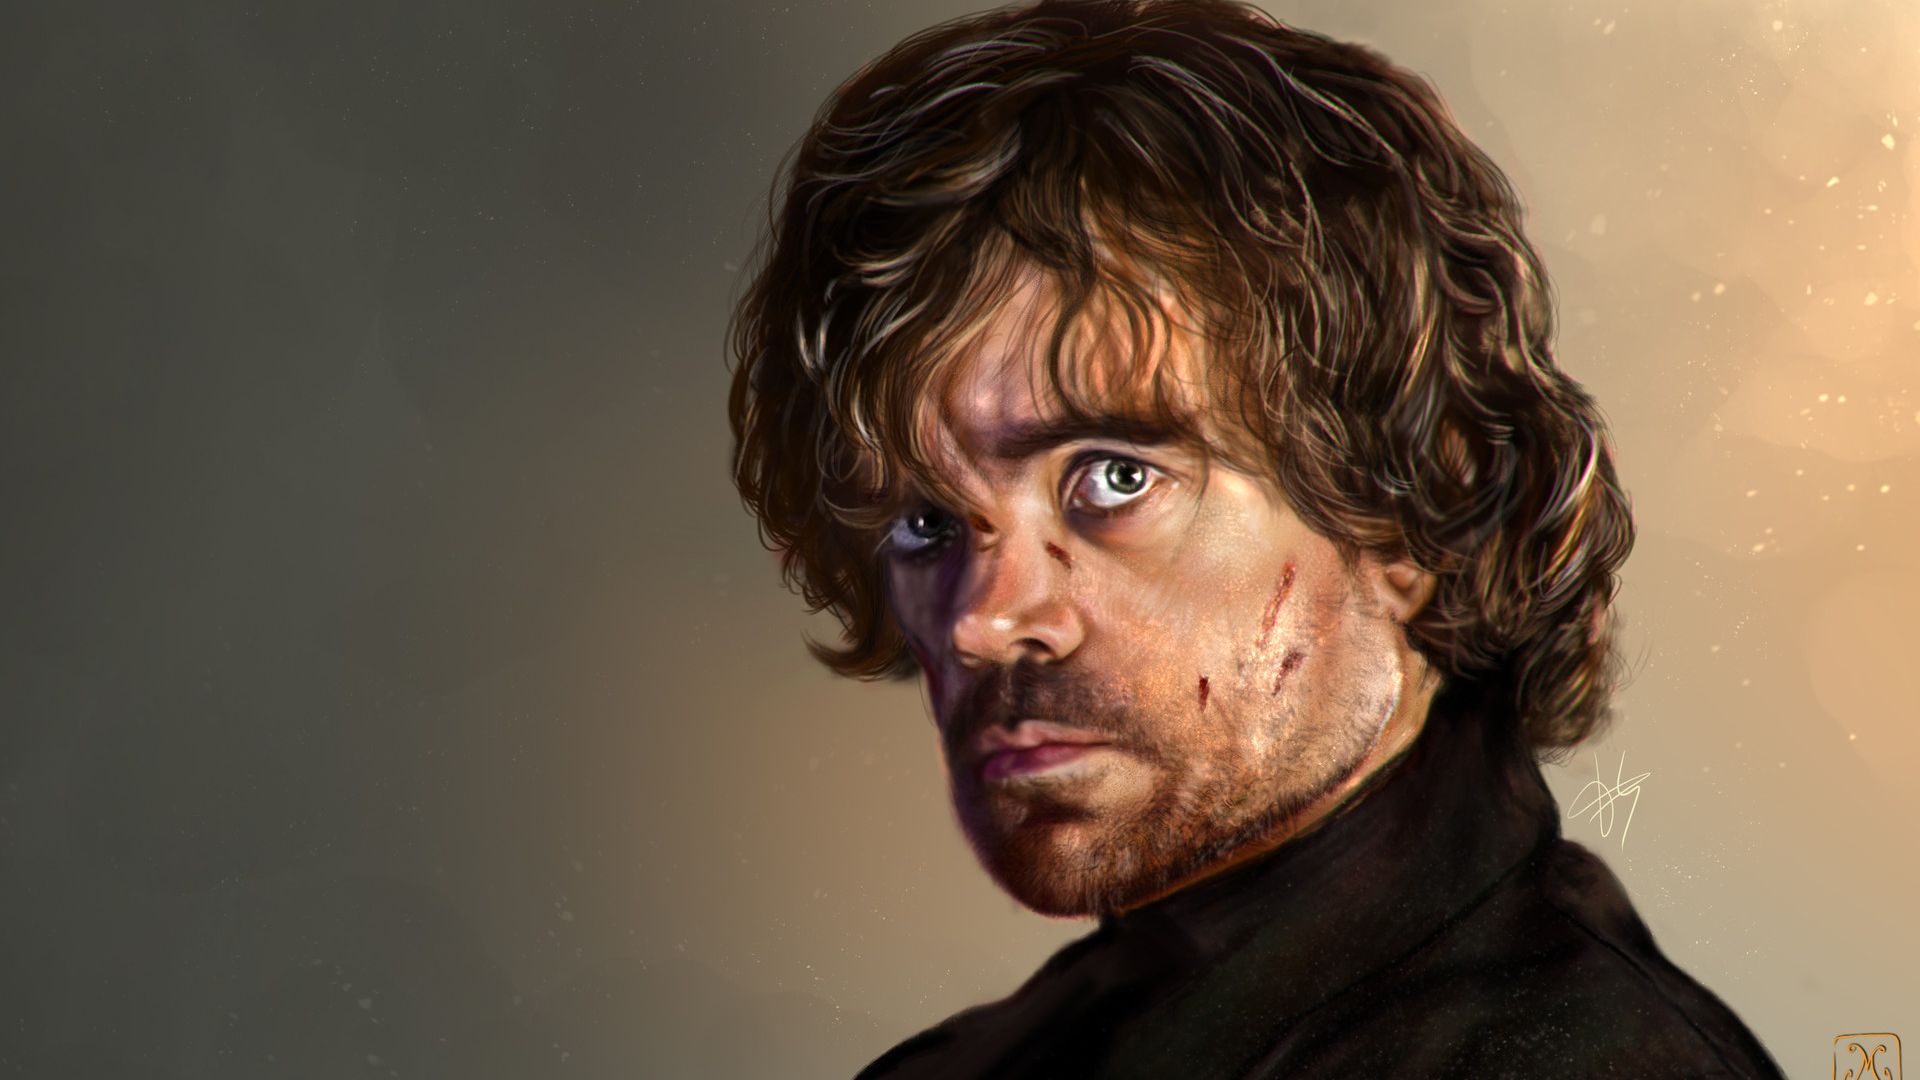 Wallpaper Peter Dinklage as Tyrion lannister amazing artwork